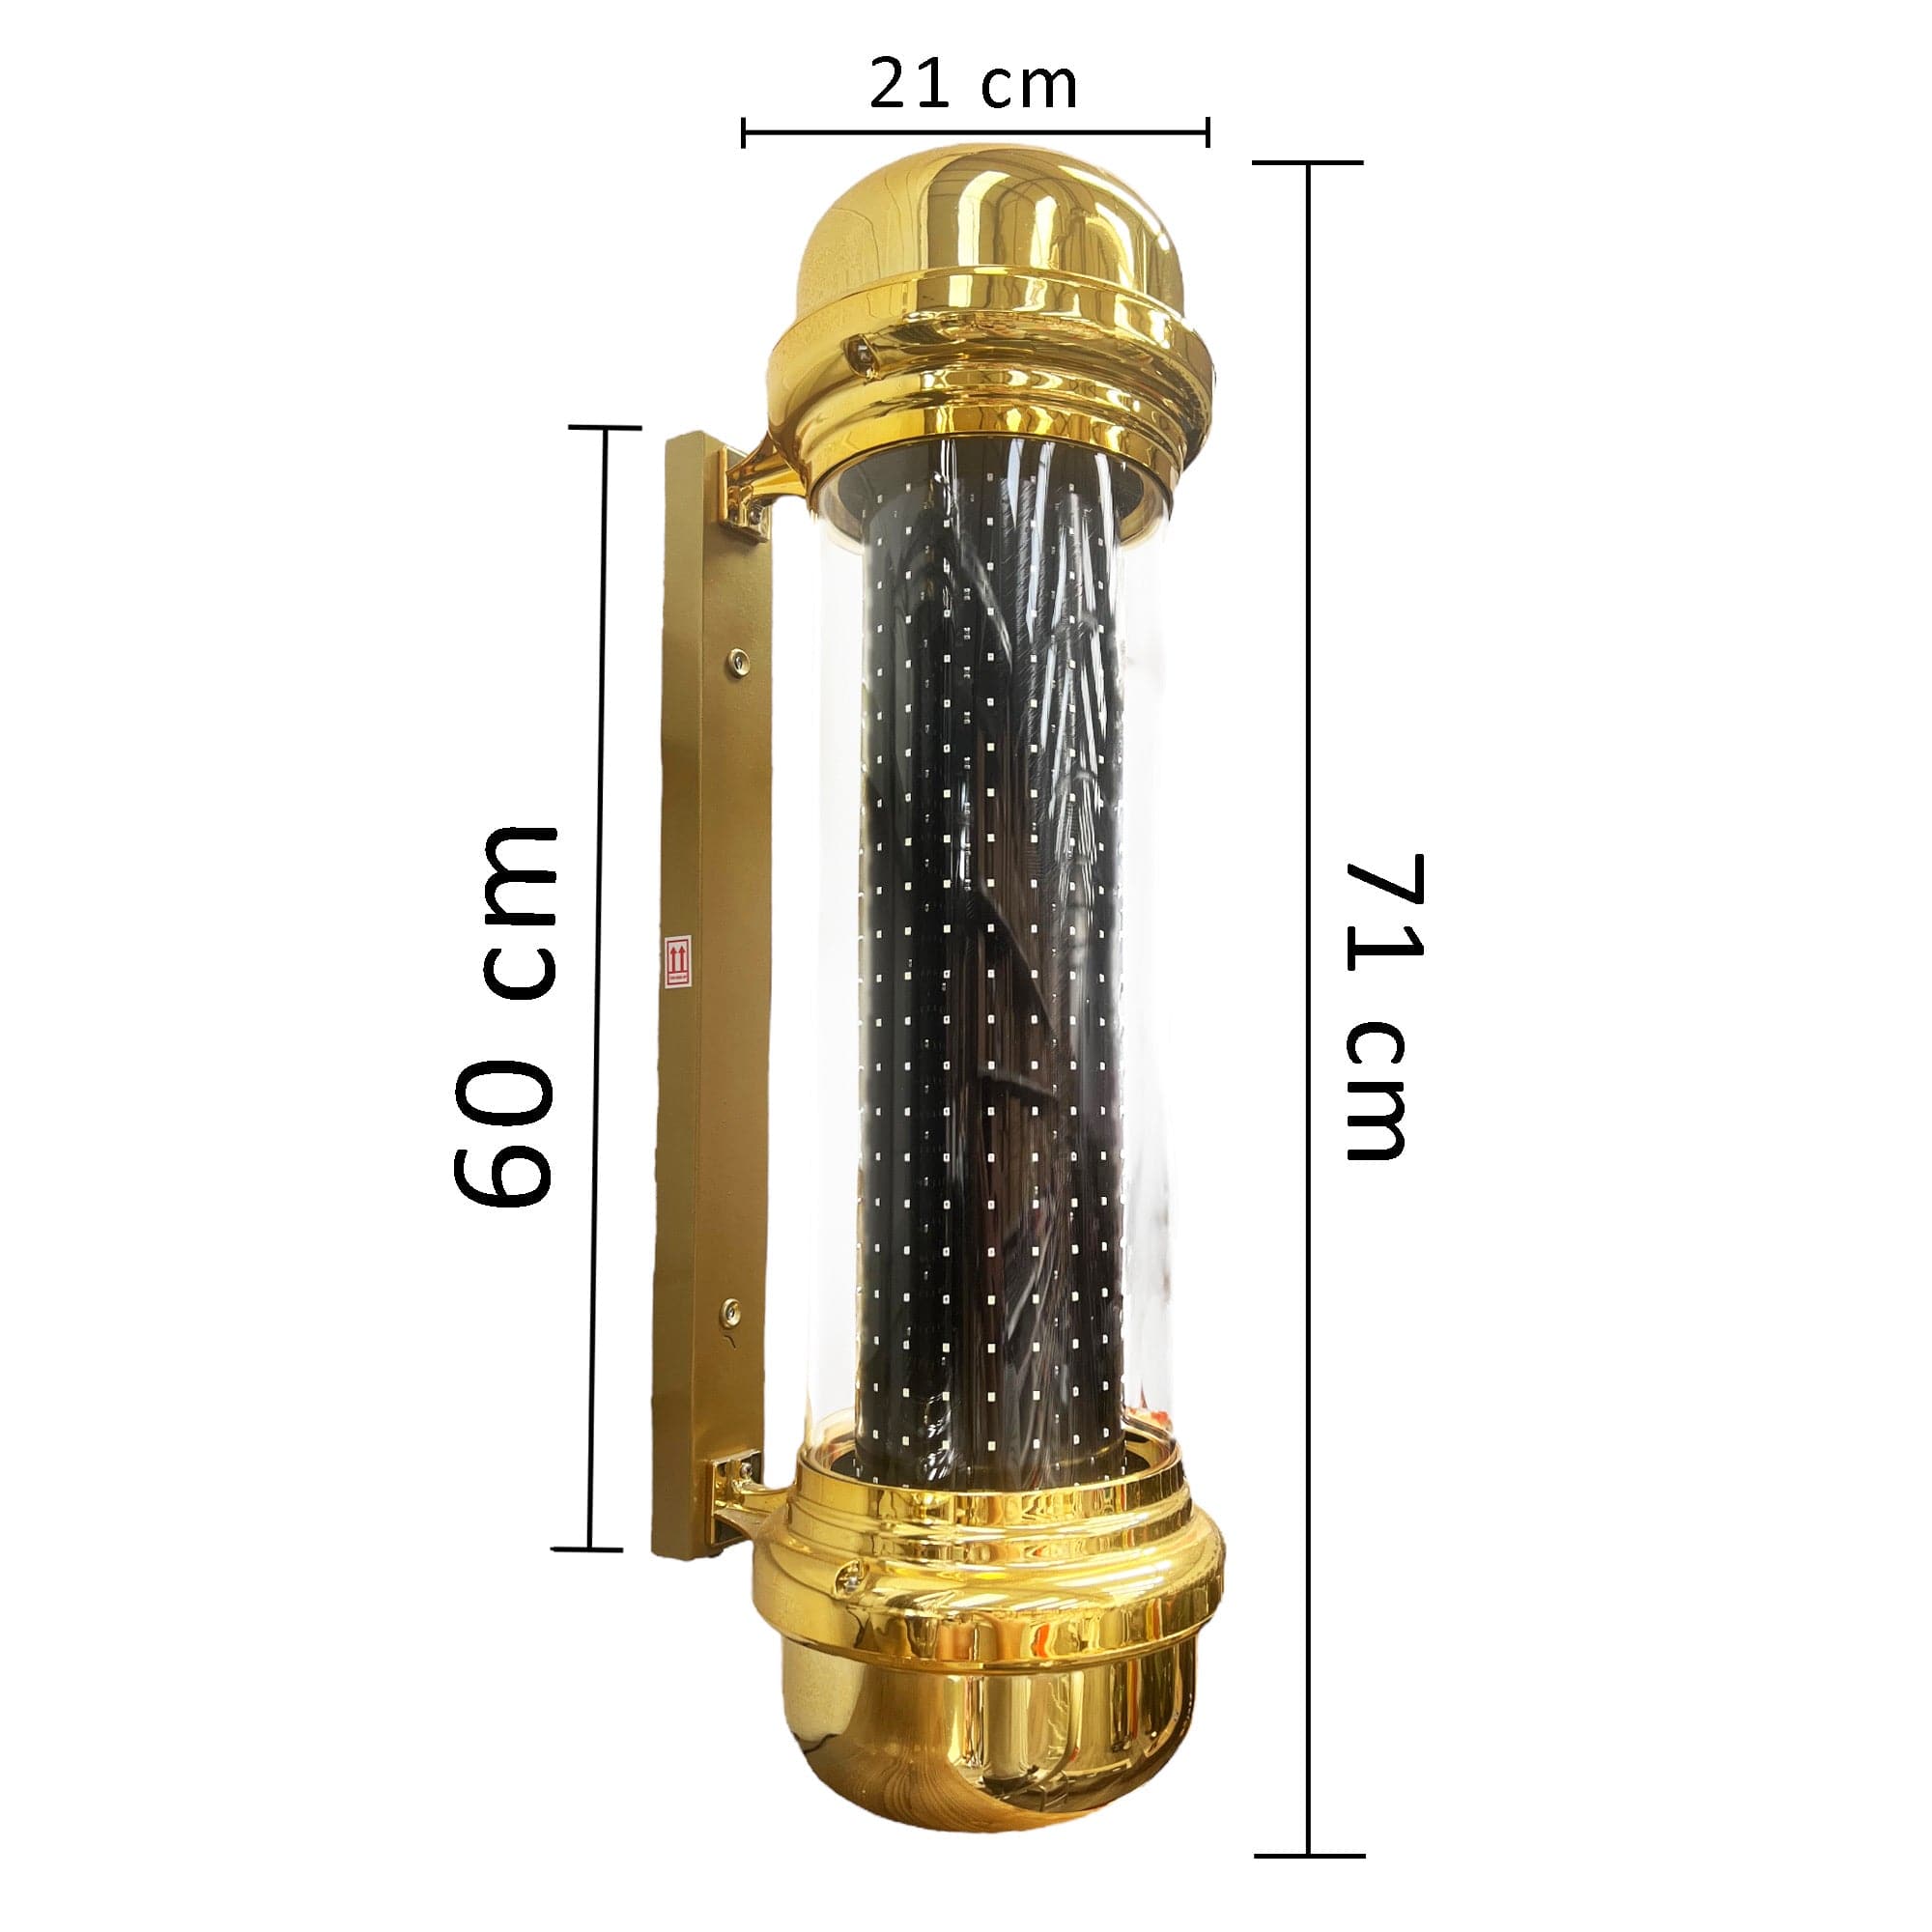 Gabri - Classic Barber Pole Digital Led Light 5 Modes With Remote Control (Gold) 70cm